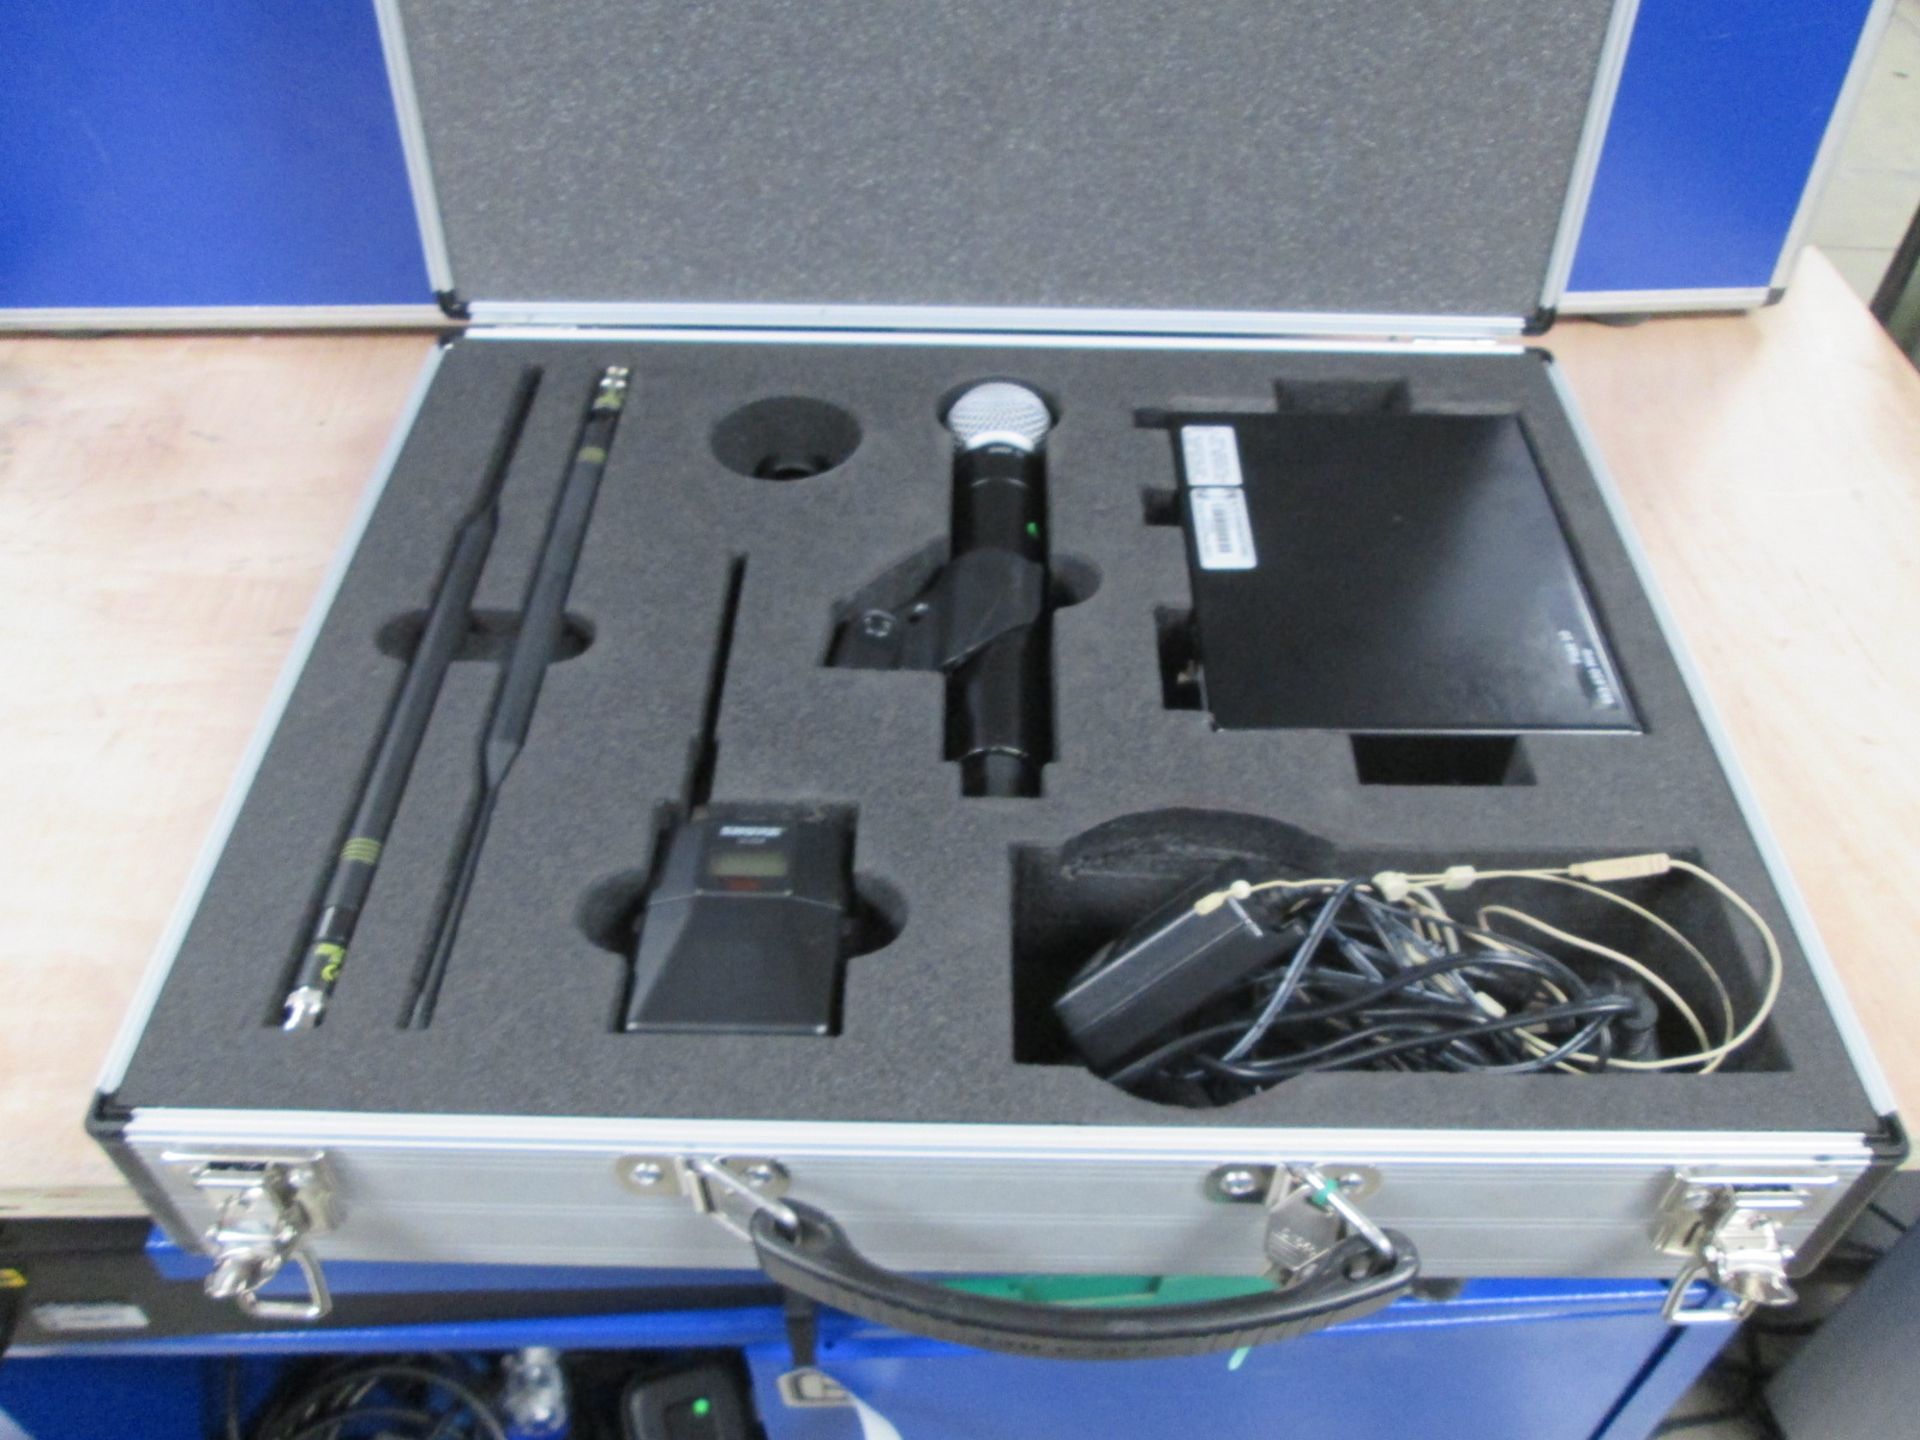 Shure QLXD4 Single Channel Radio Mic Kit 606-670 MHz (Qty 5) Kit to include K51 receiver, QLXD2